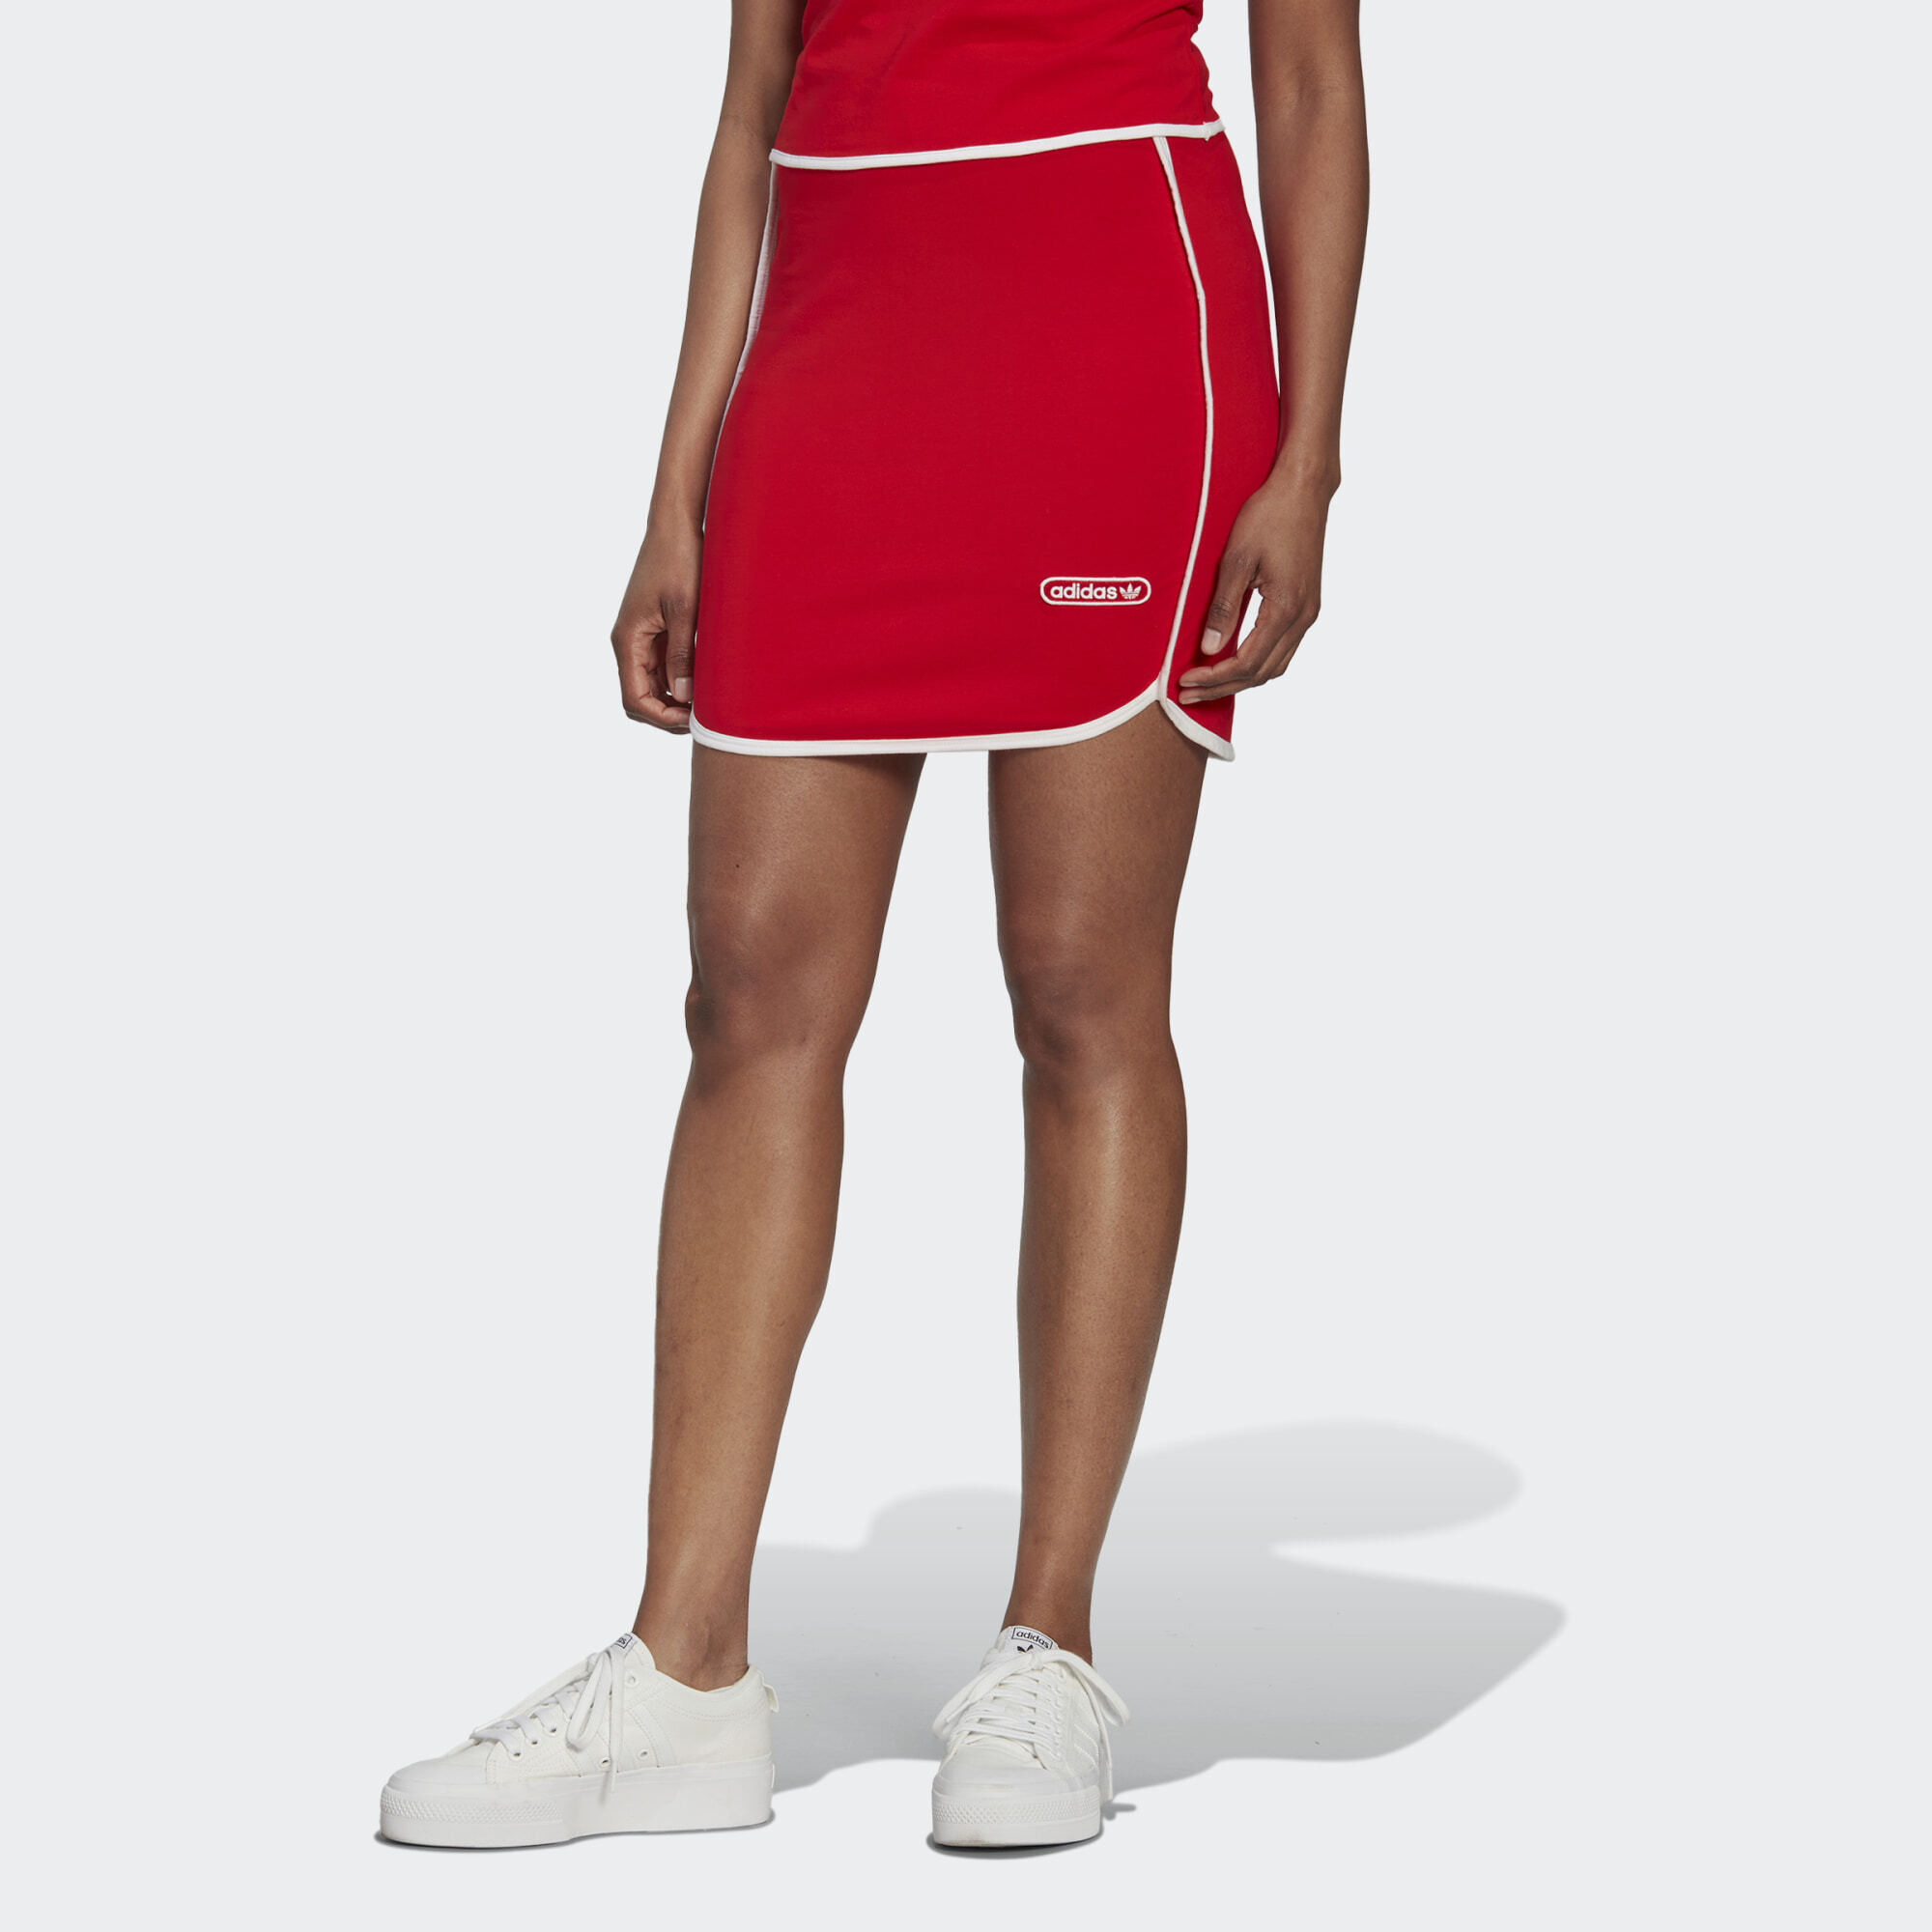 adidas Originals Mini Skirt With Binding Details (9000121707_1634)